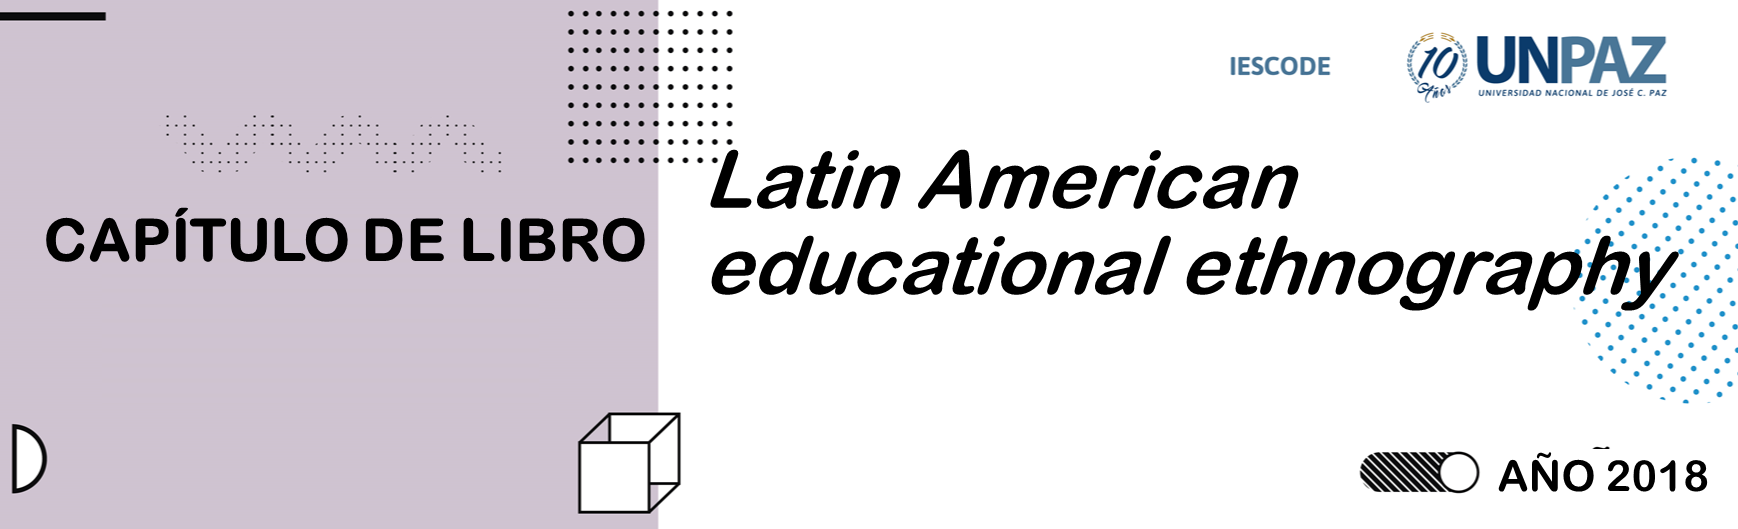 Latin American educational ethnography